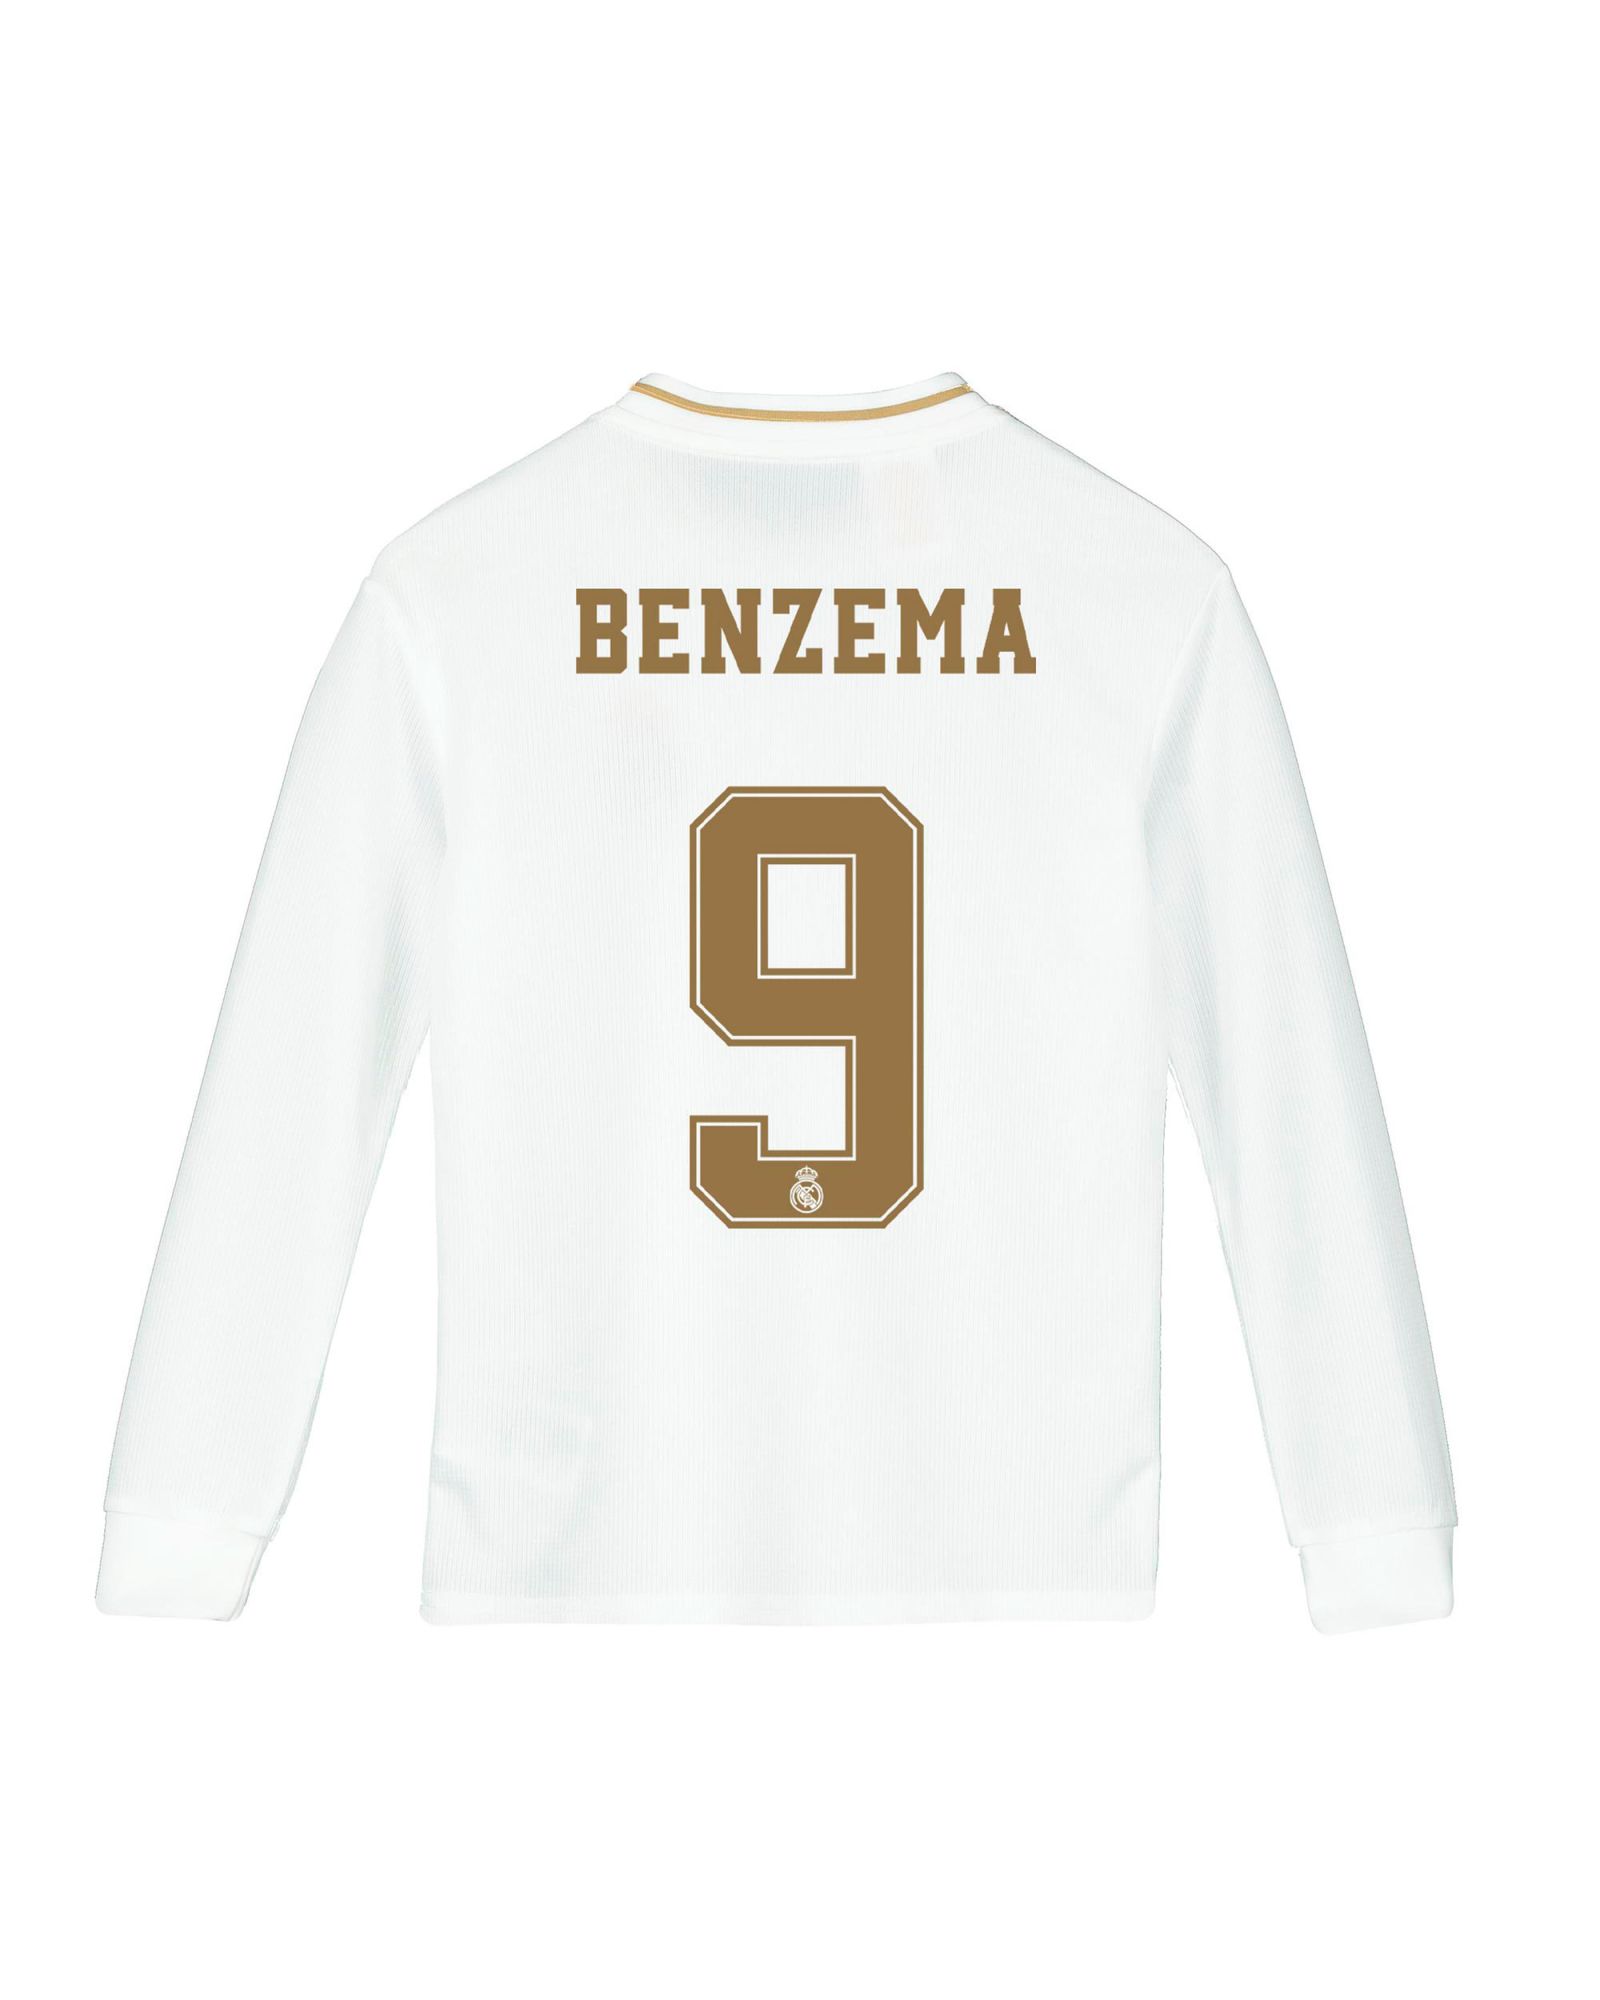 Camiseta 1ª Real Madrid 2019/2020 Manga Larga Junior Benzema - Fútbol Factory